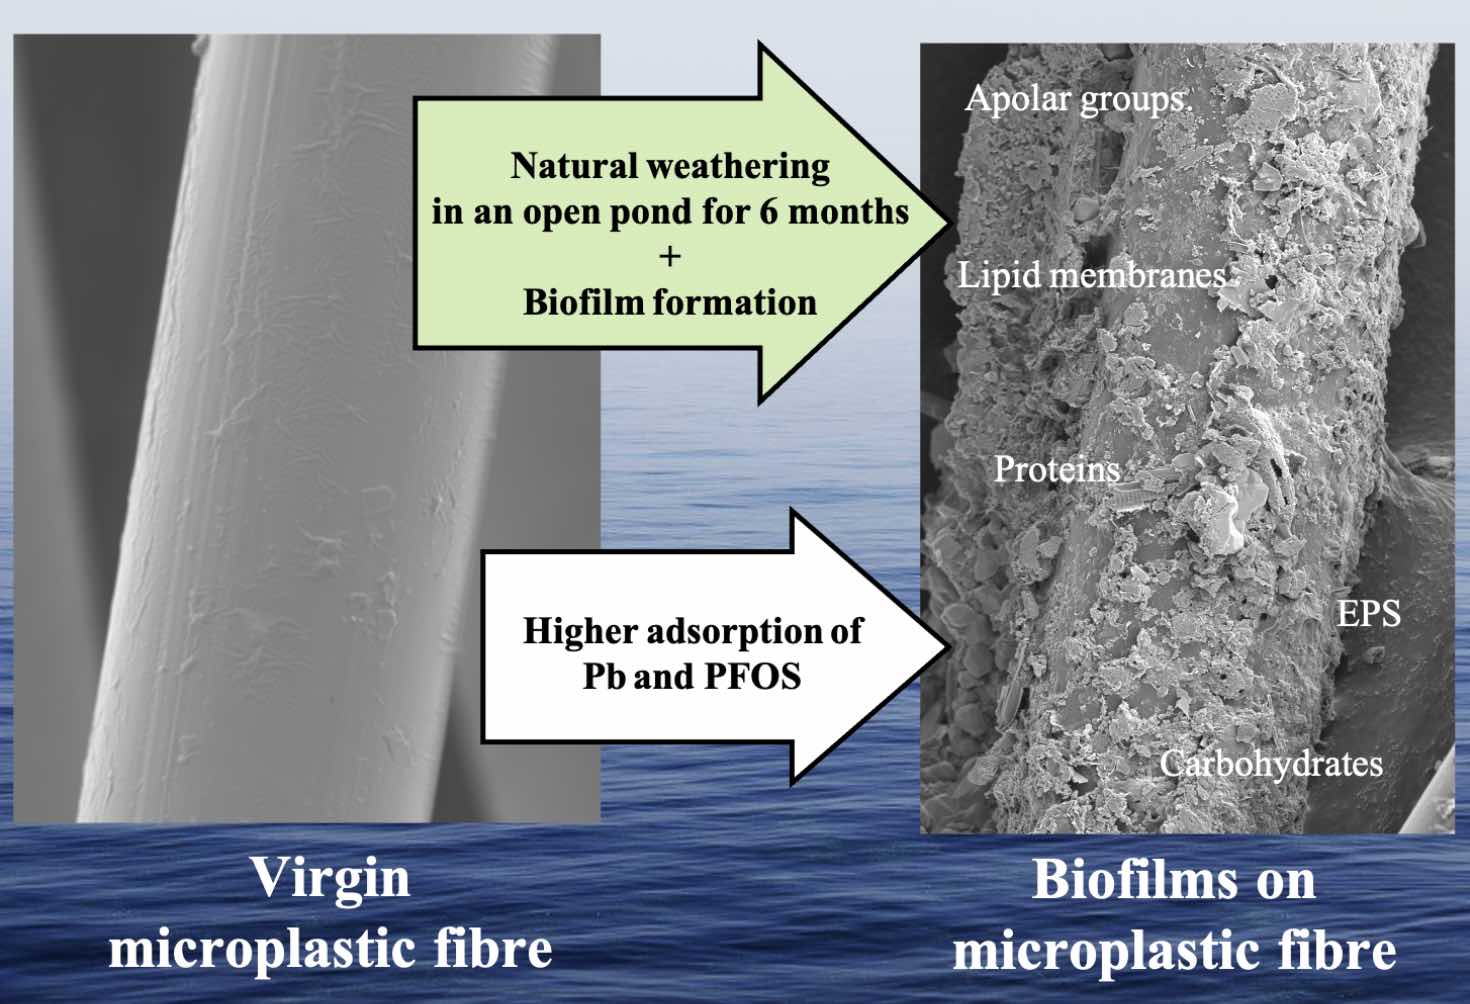 Biofilms increase contaminants on microplastics